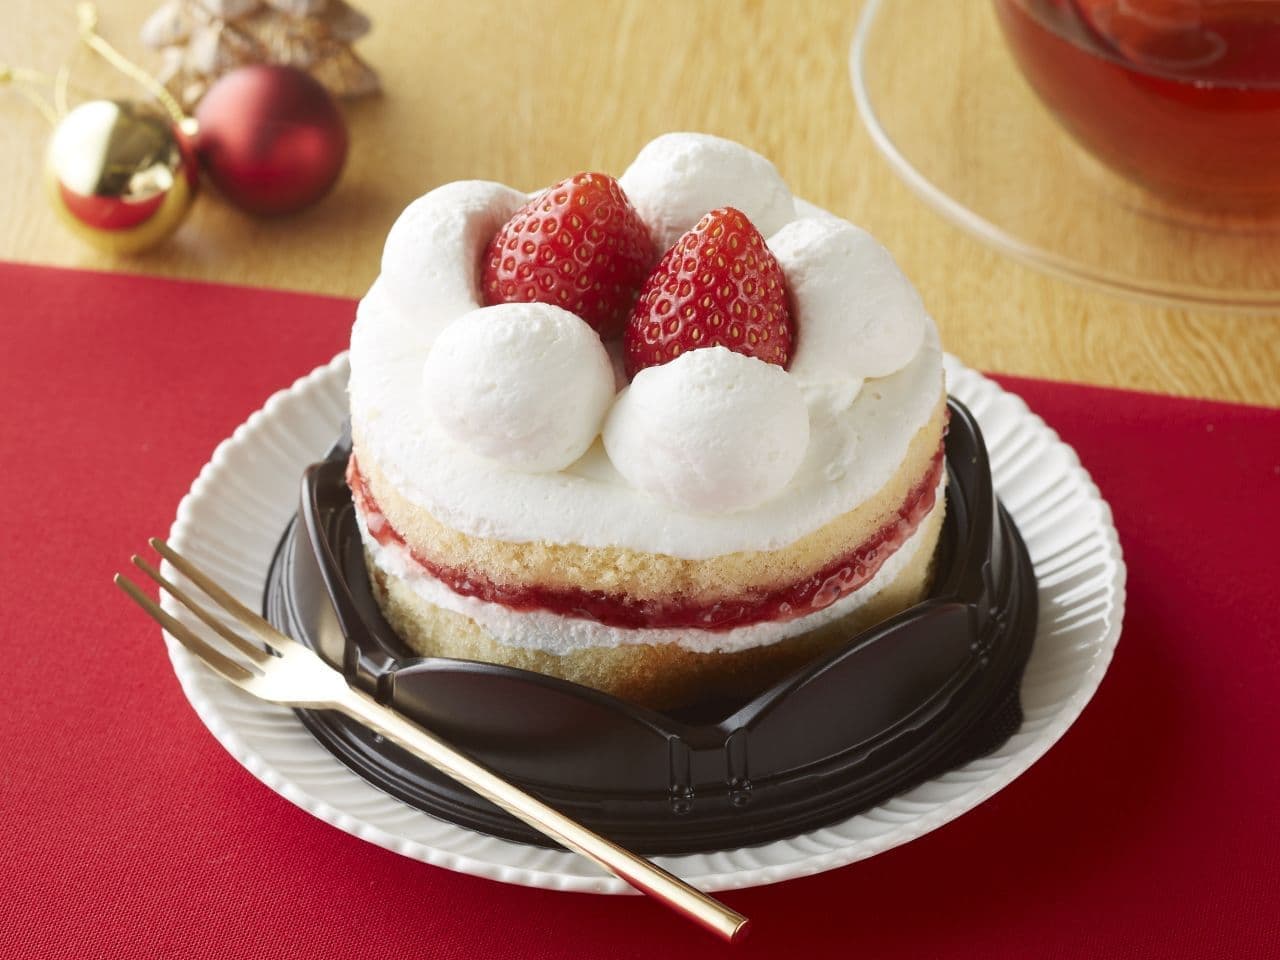 Ministop "Special Strawberry Shortcake"